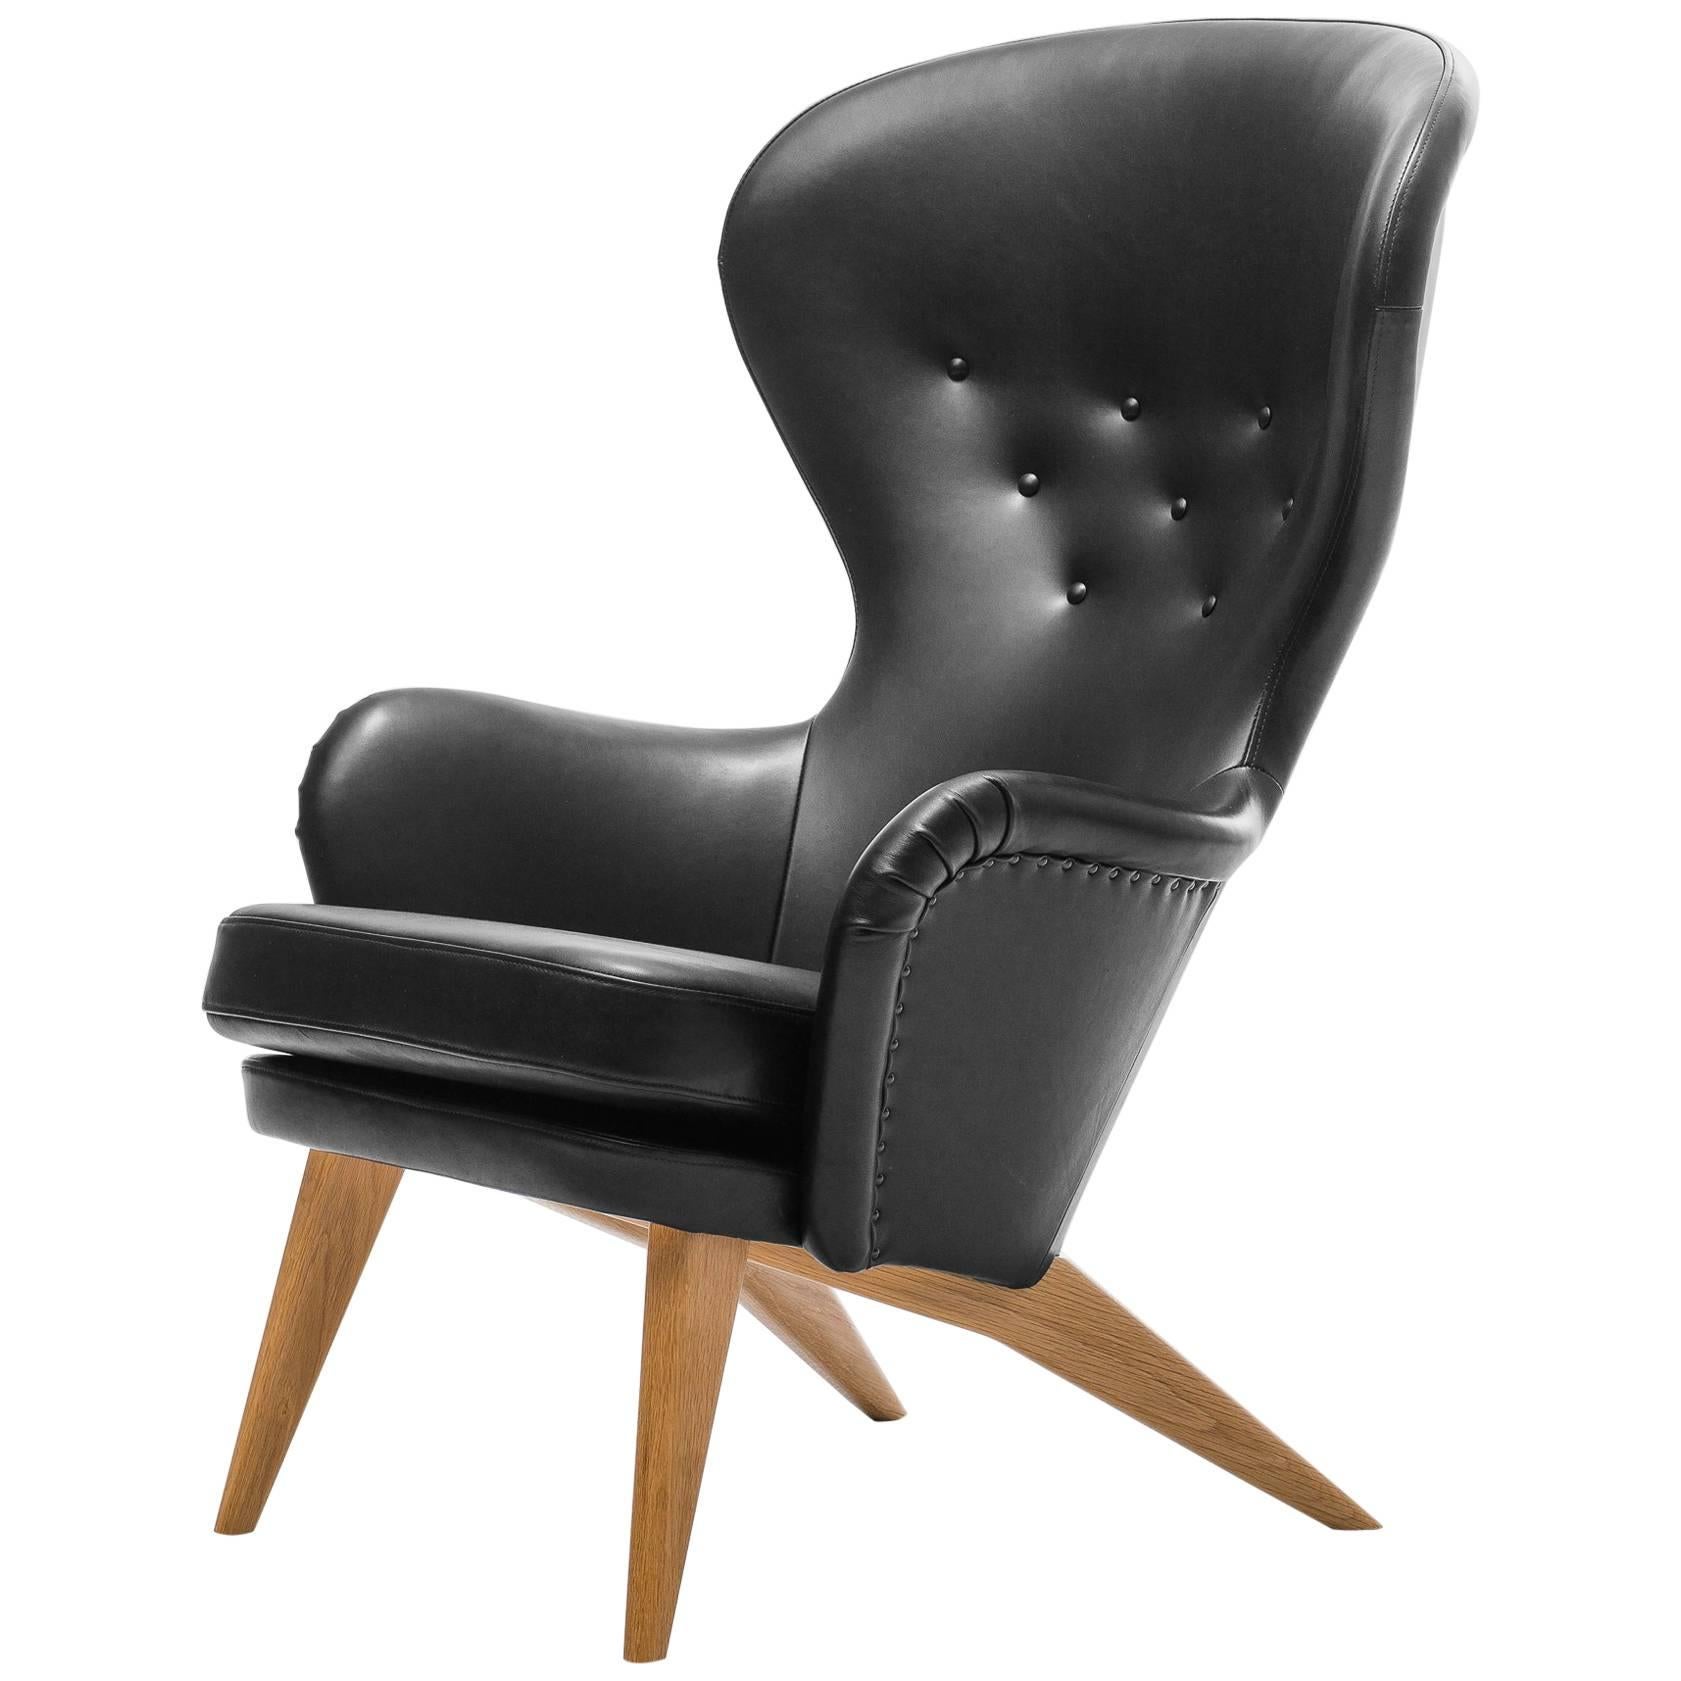 Siesta Lounge Chair in Black Leather Design by Carl Gustav Hiort af Ornäs For Sale